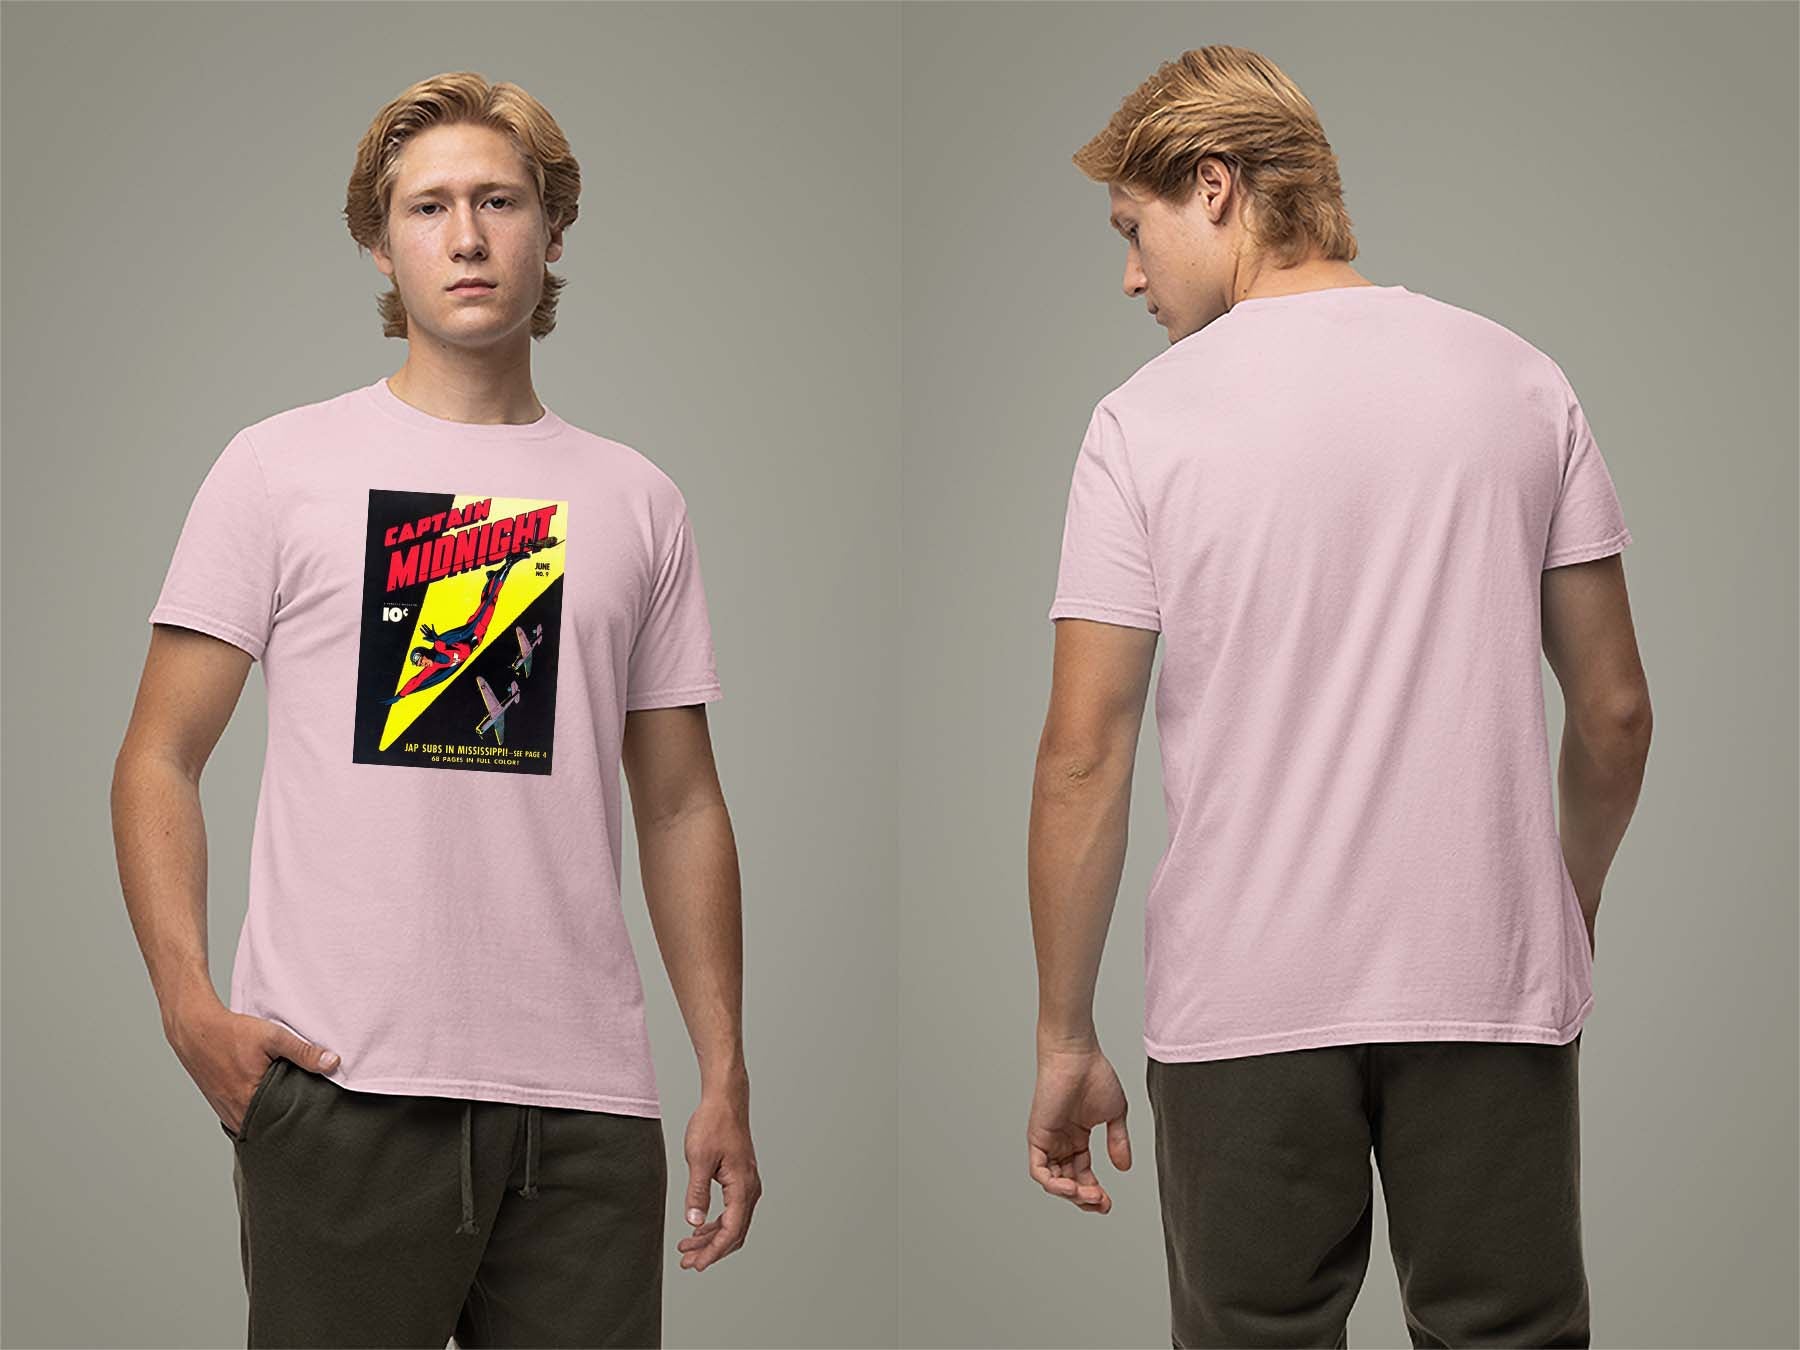 Captain Midnight No9 T-Shirt Small Light Pink